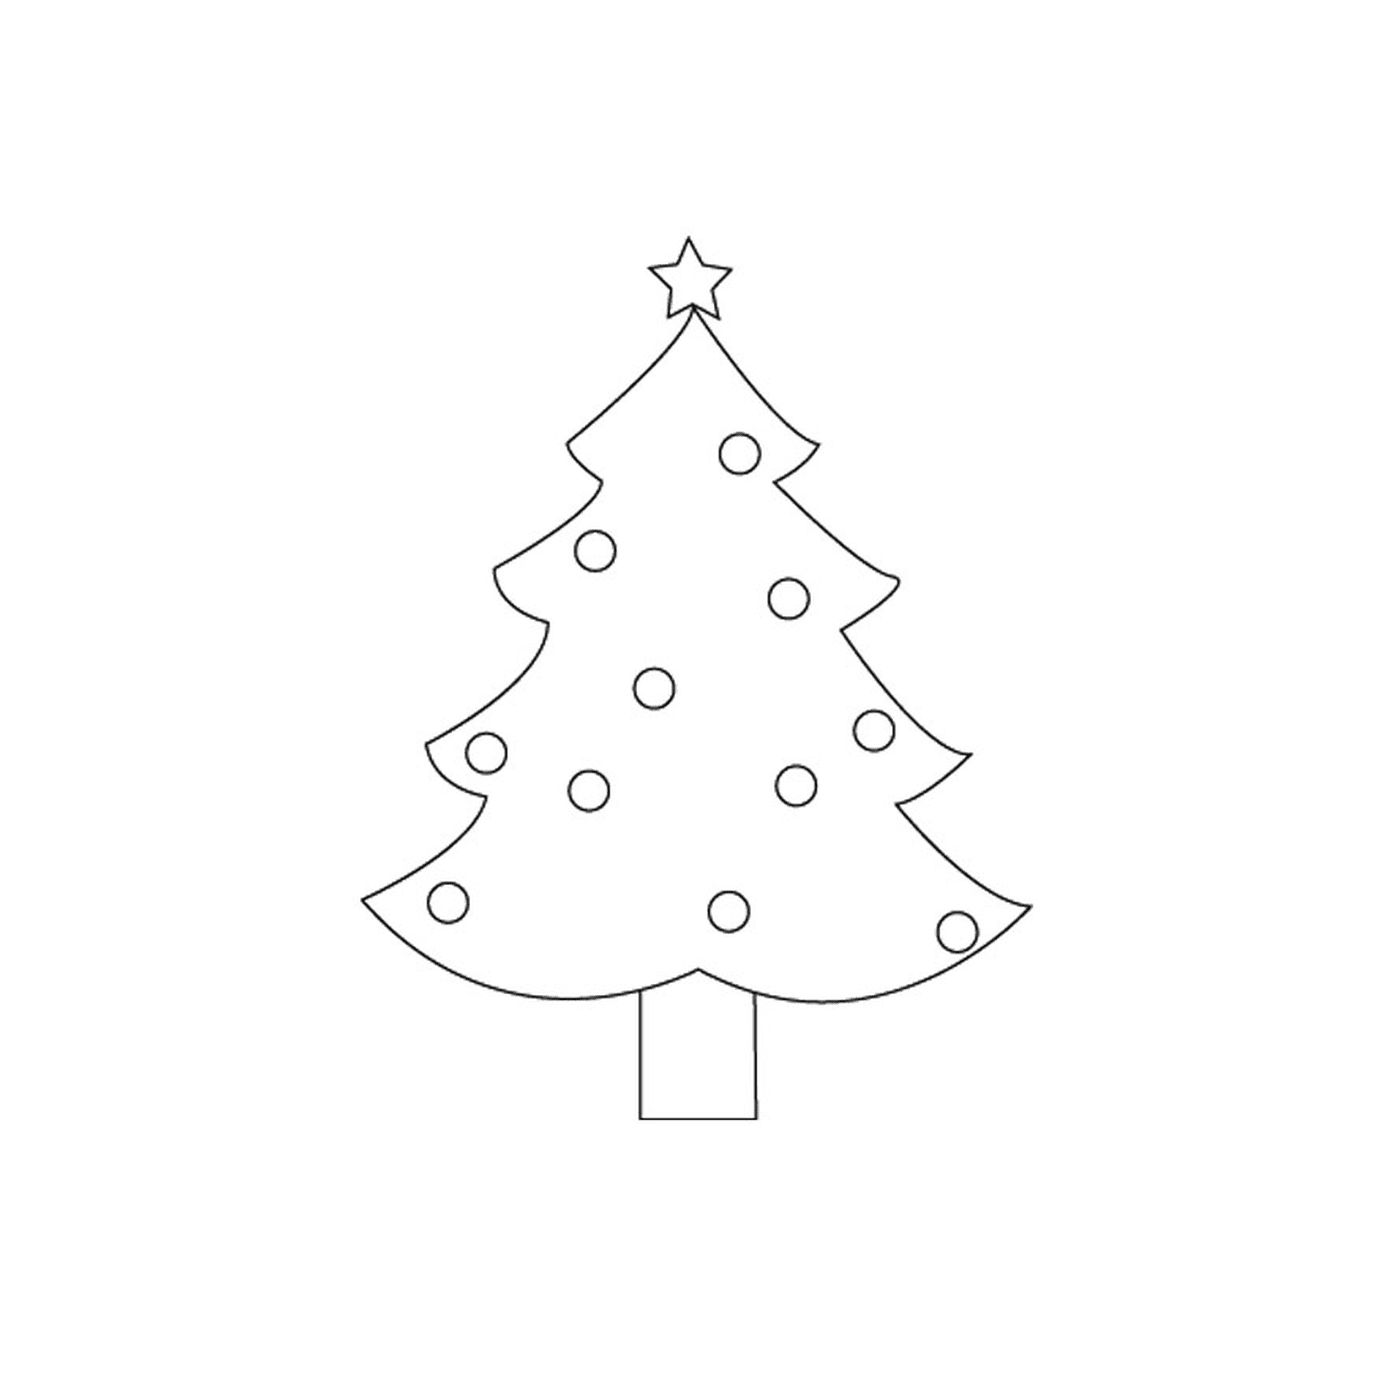  A simple Christmas tree 